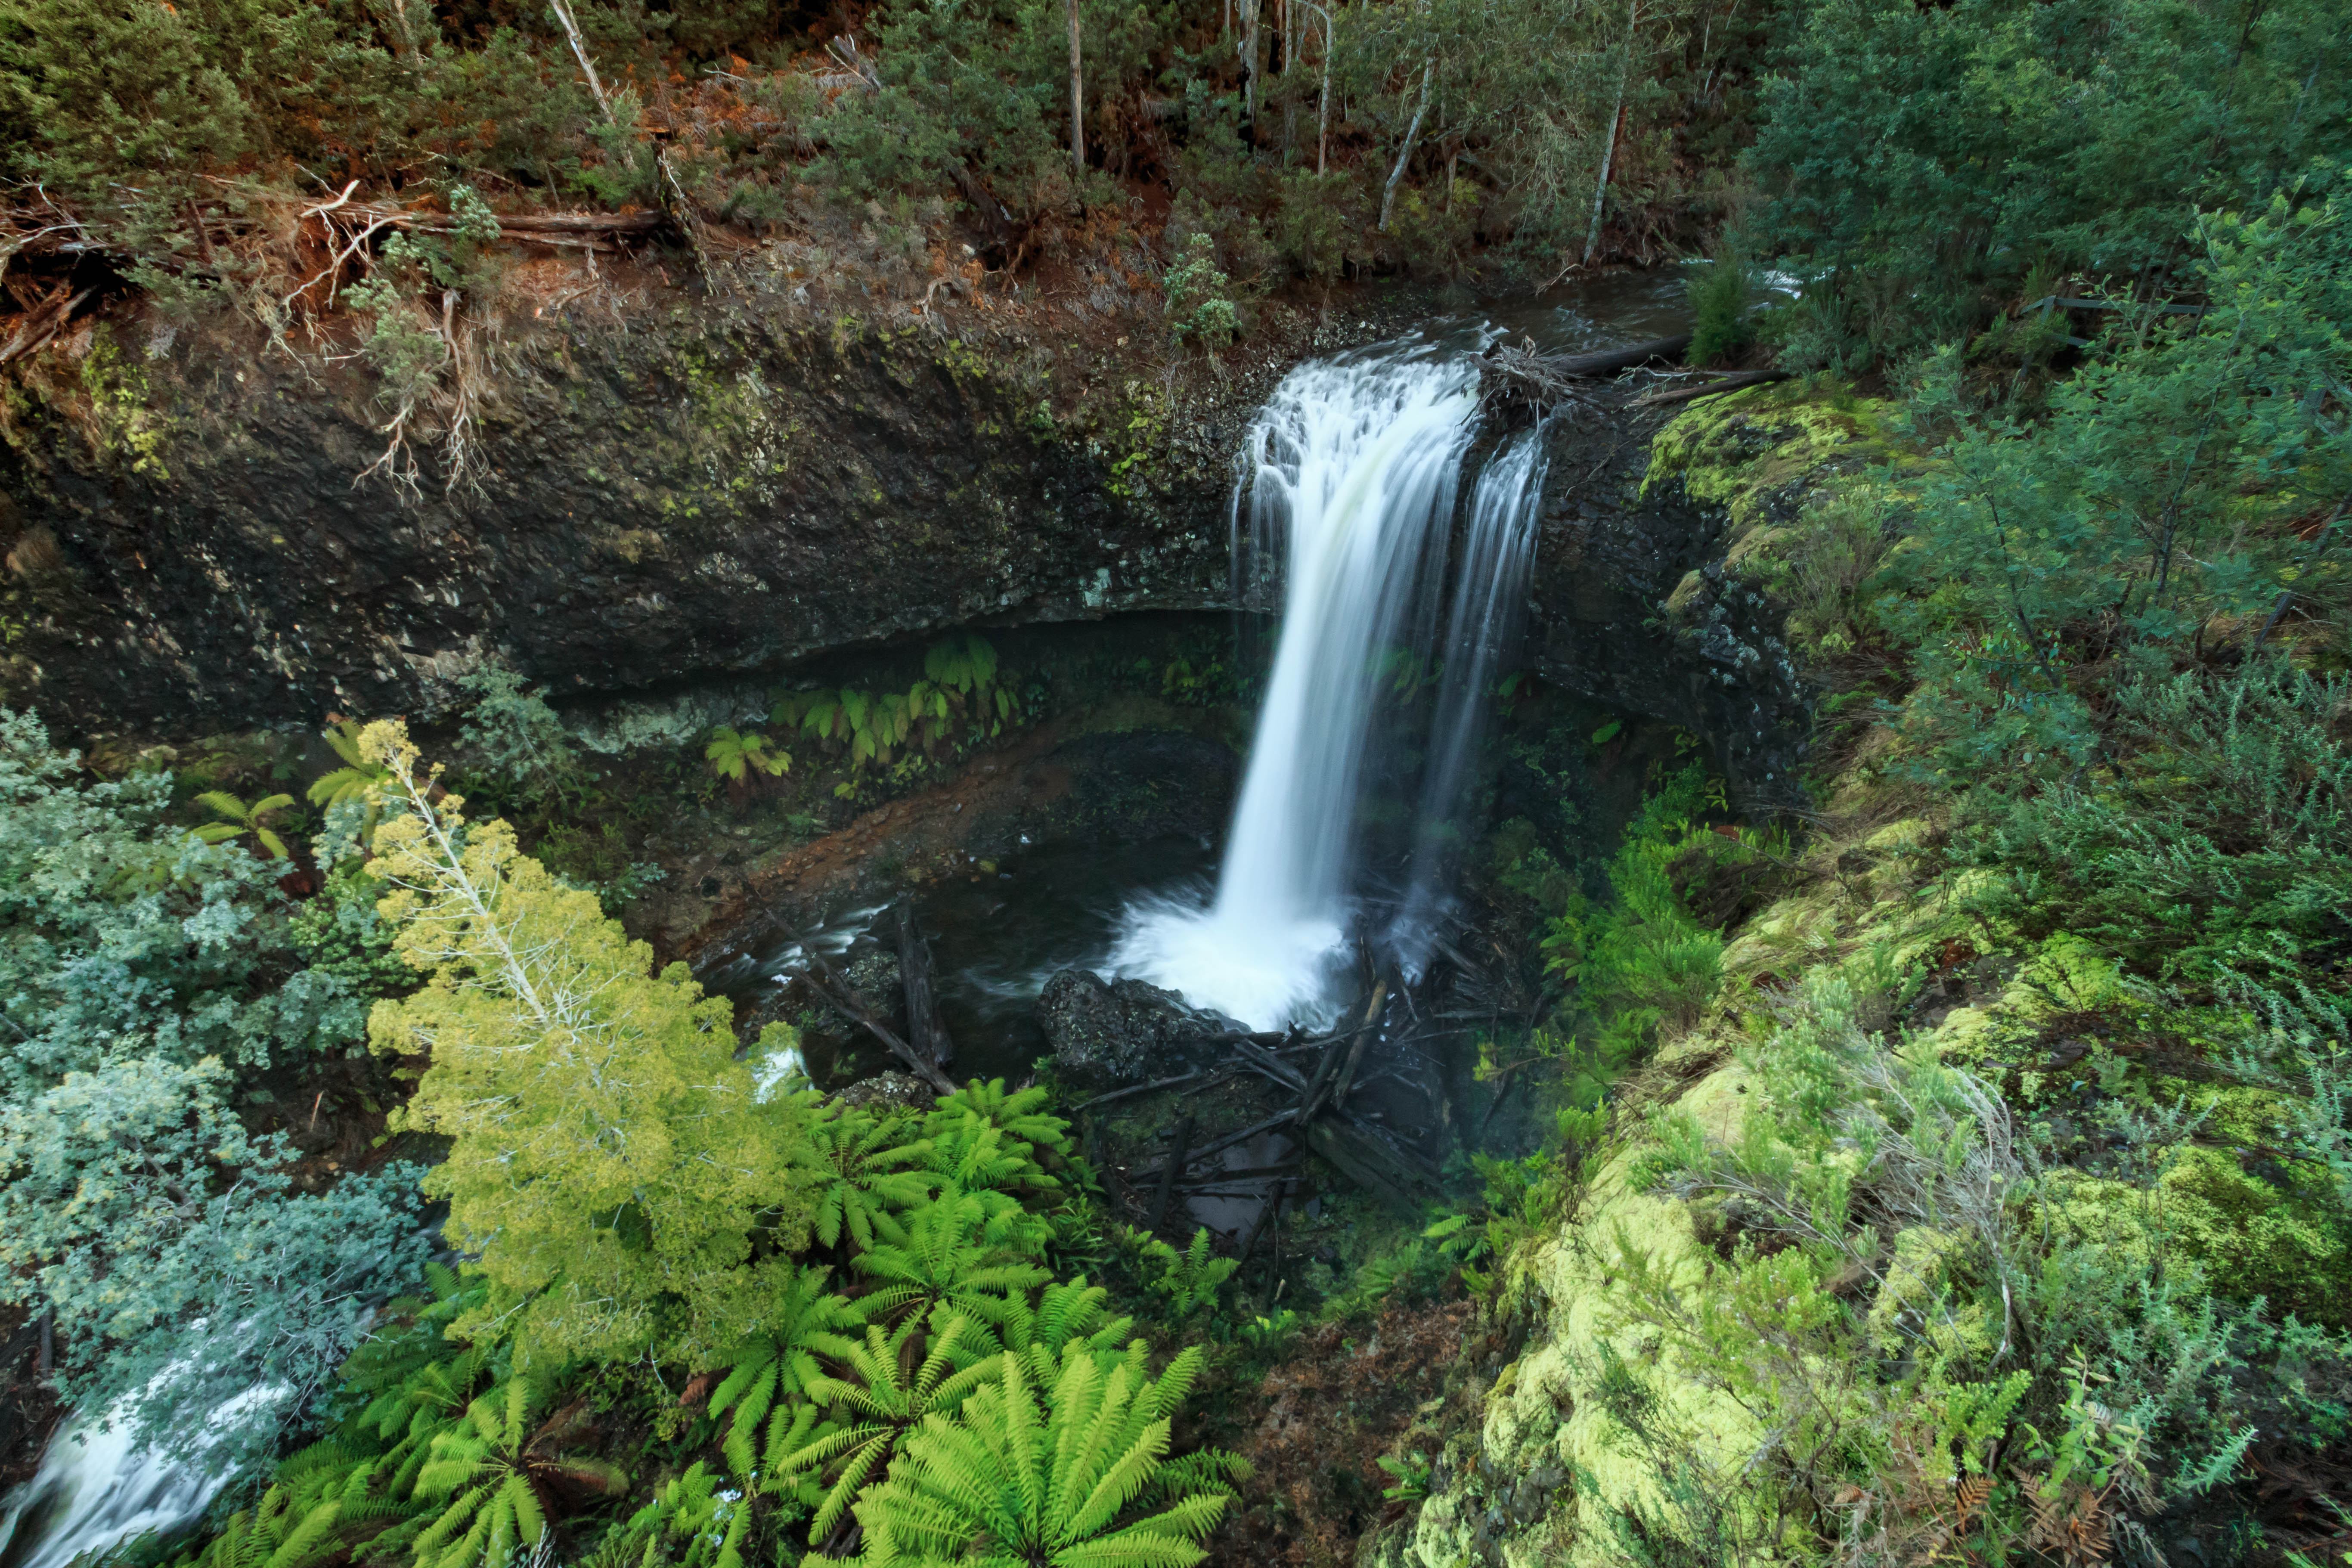 Wilsons Falls, also known as Tarraleah Falls